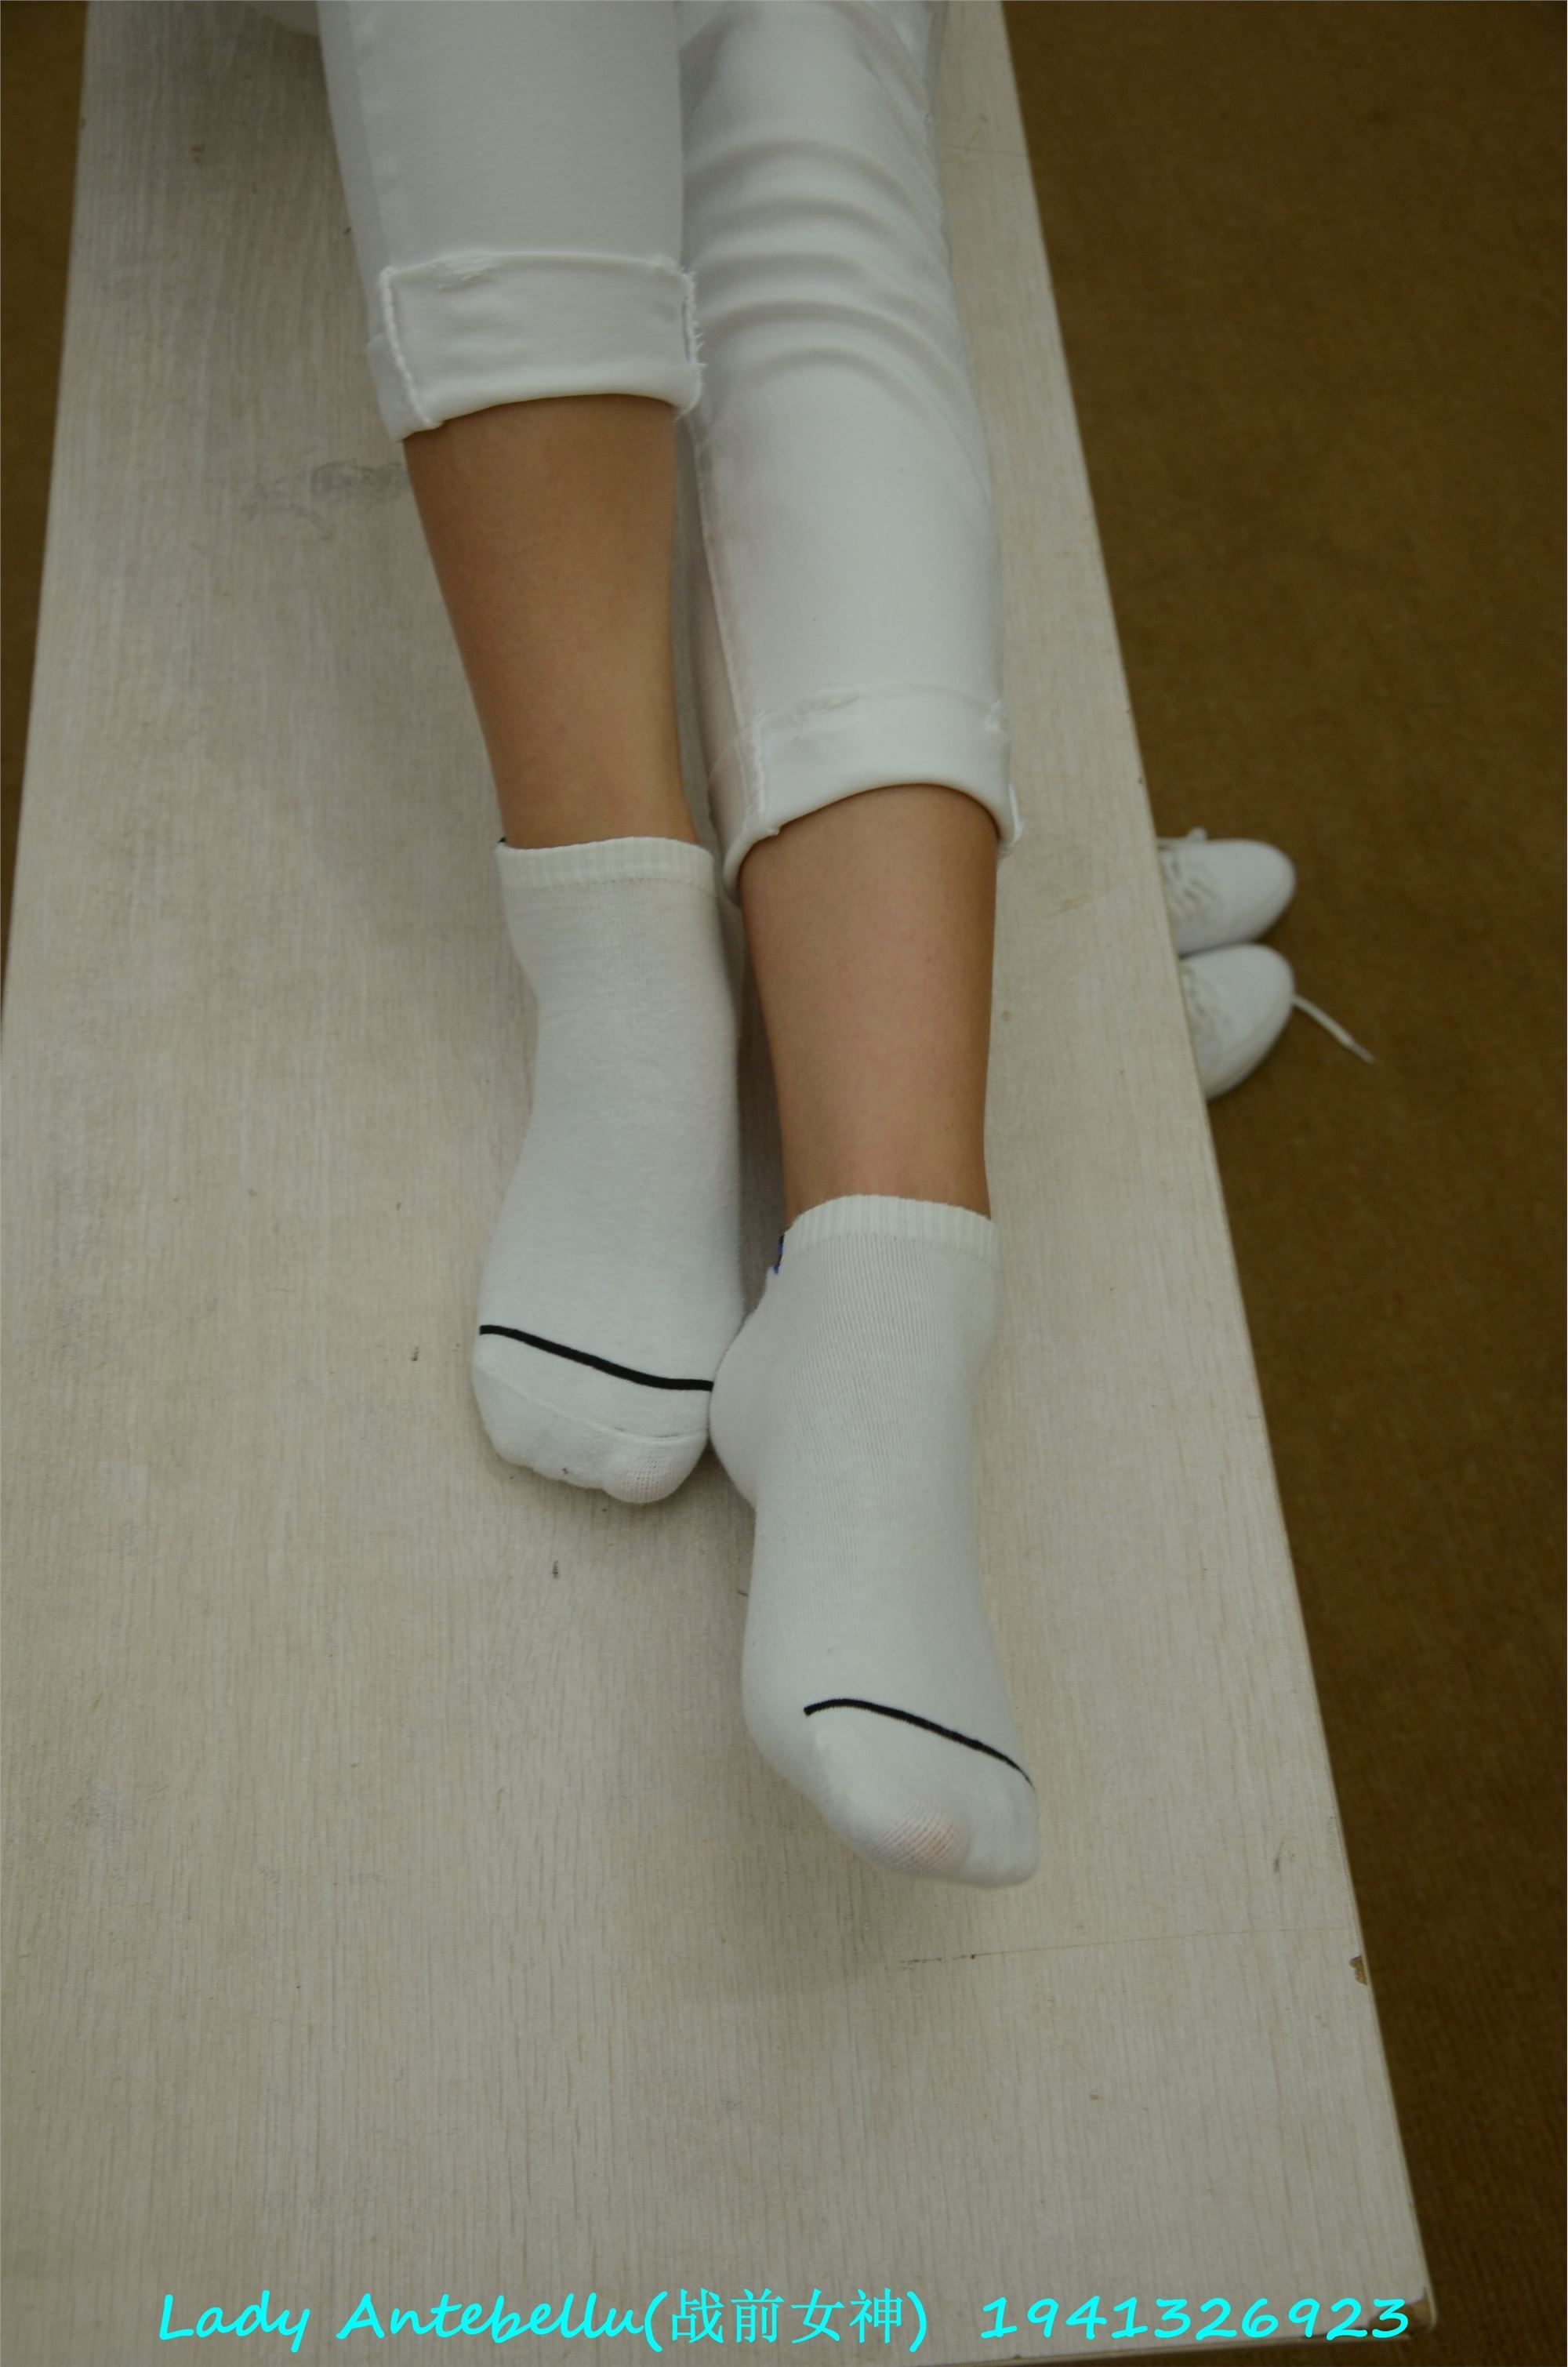 Pre war goddess's feet and legs cotton stockings goddess photography set 052